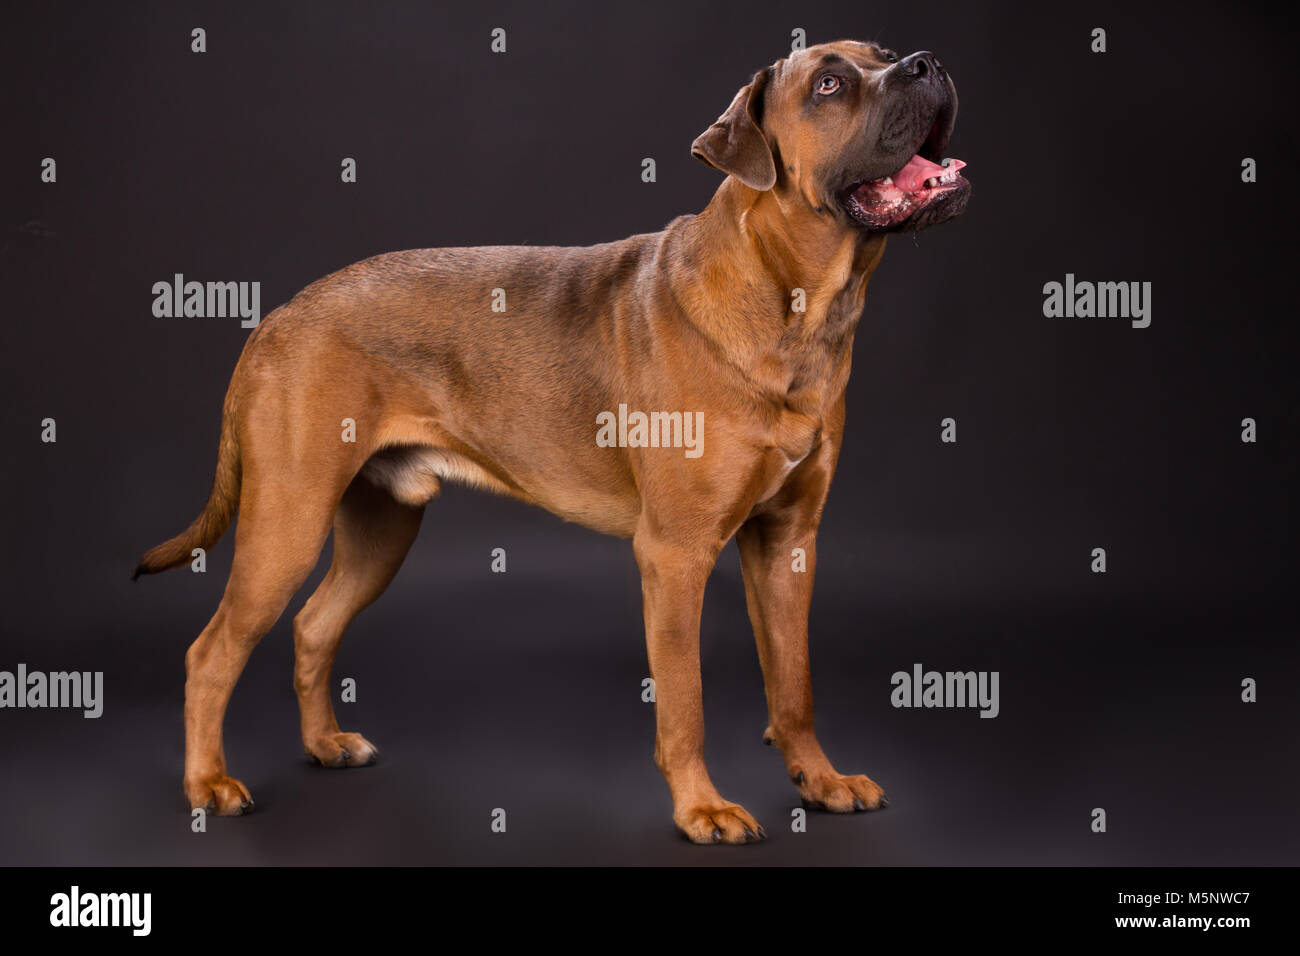 Cute brown pedigreed dog. Stock Photo